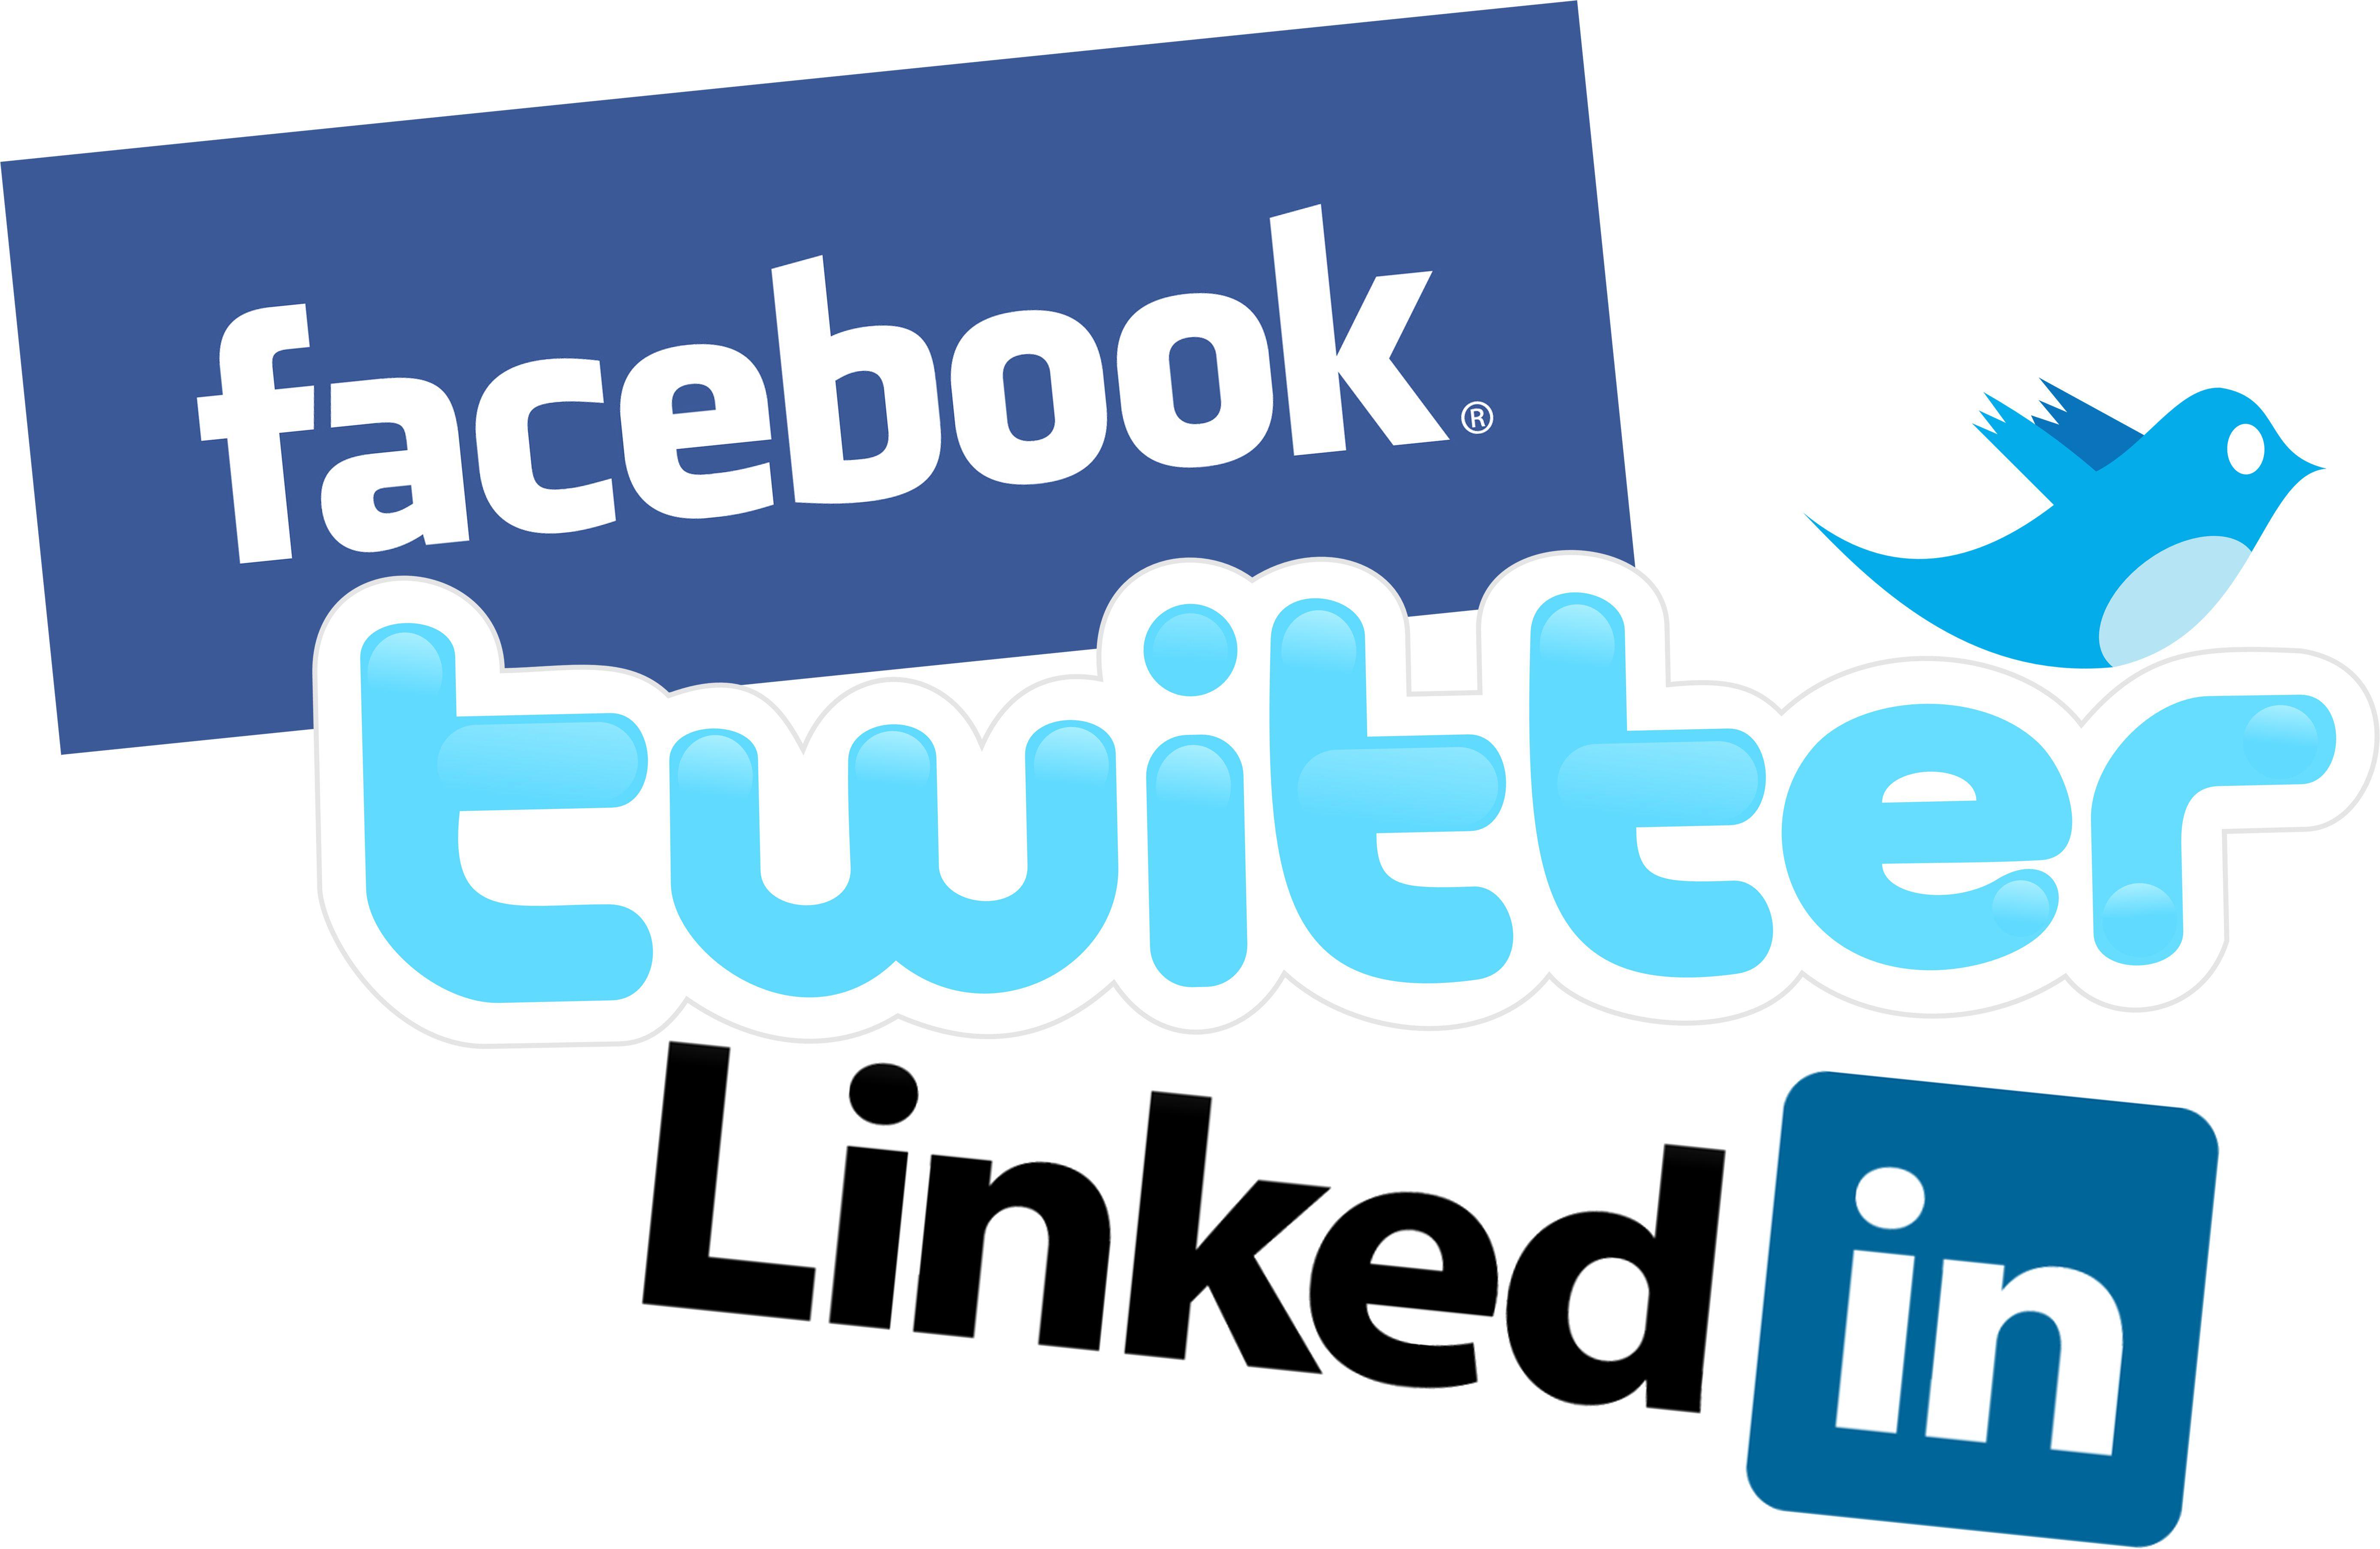 Facebook Twitter LinkedIn Logo - article on how to delete gmail, facebook, twitter, and linkedin